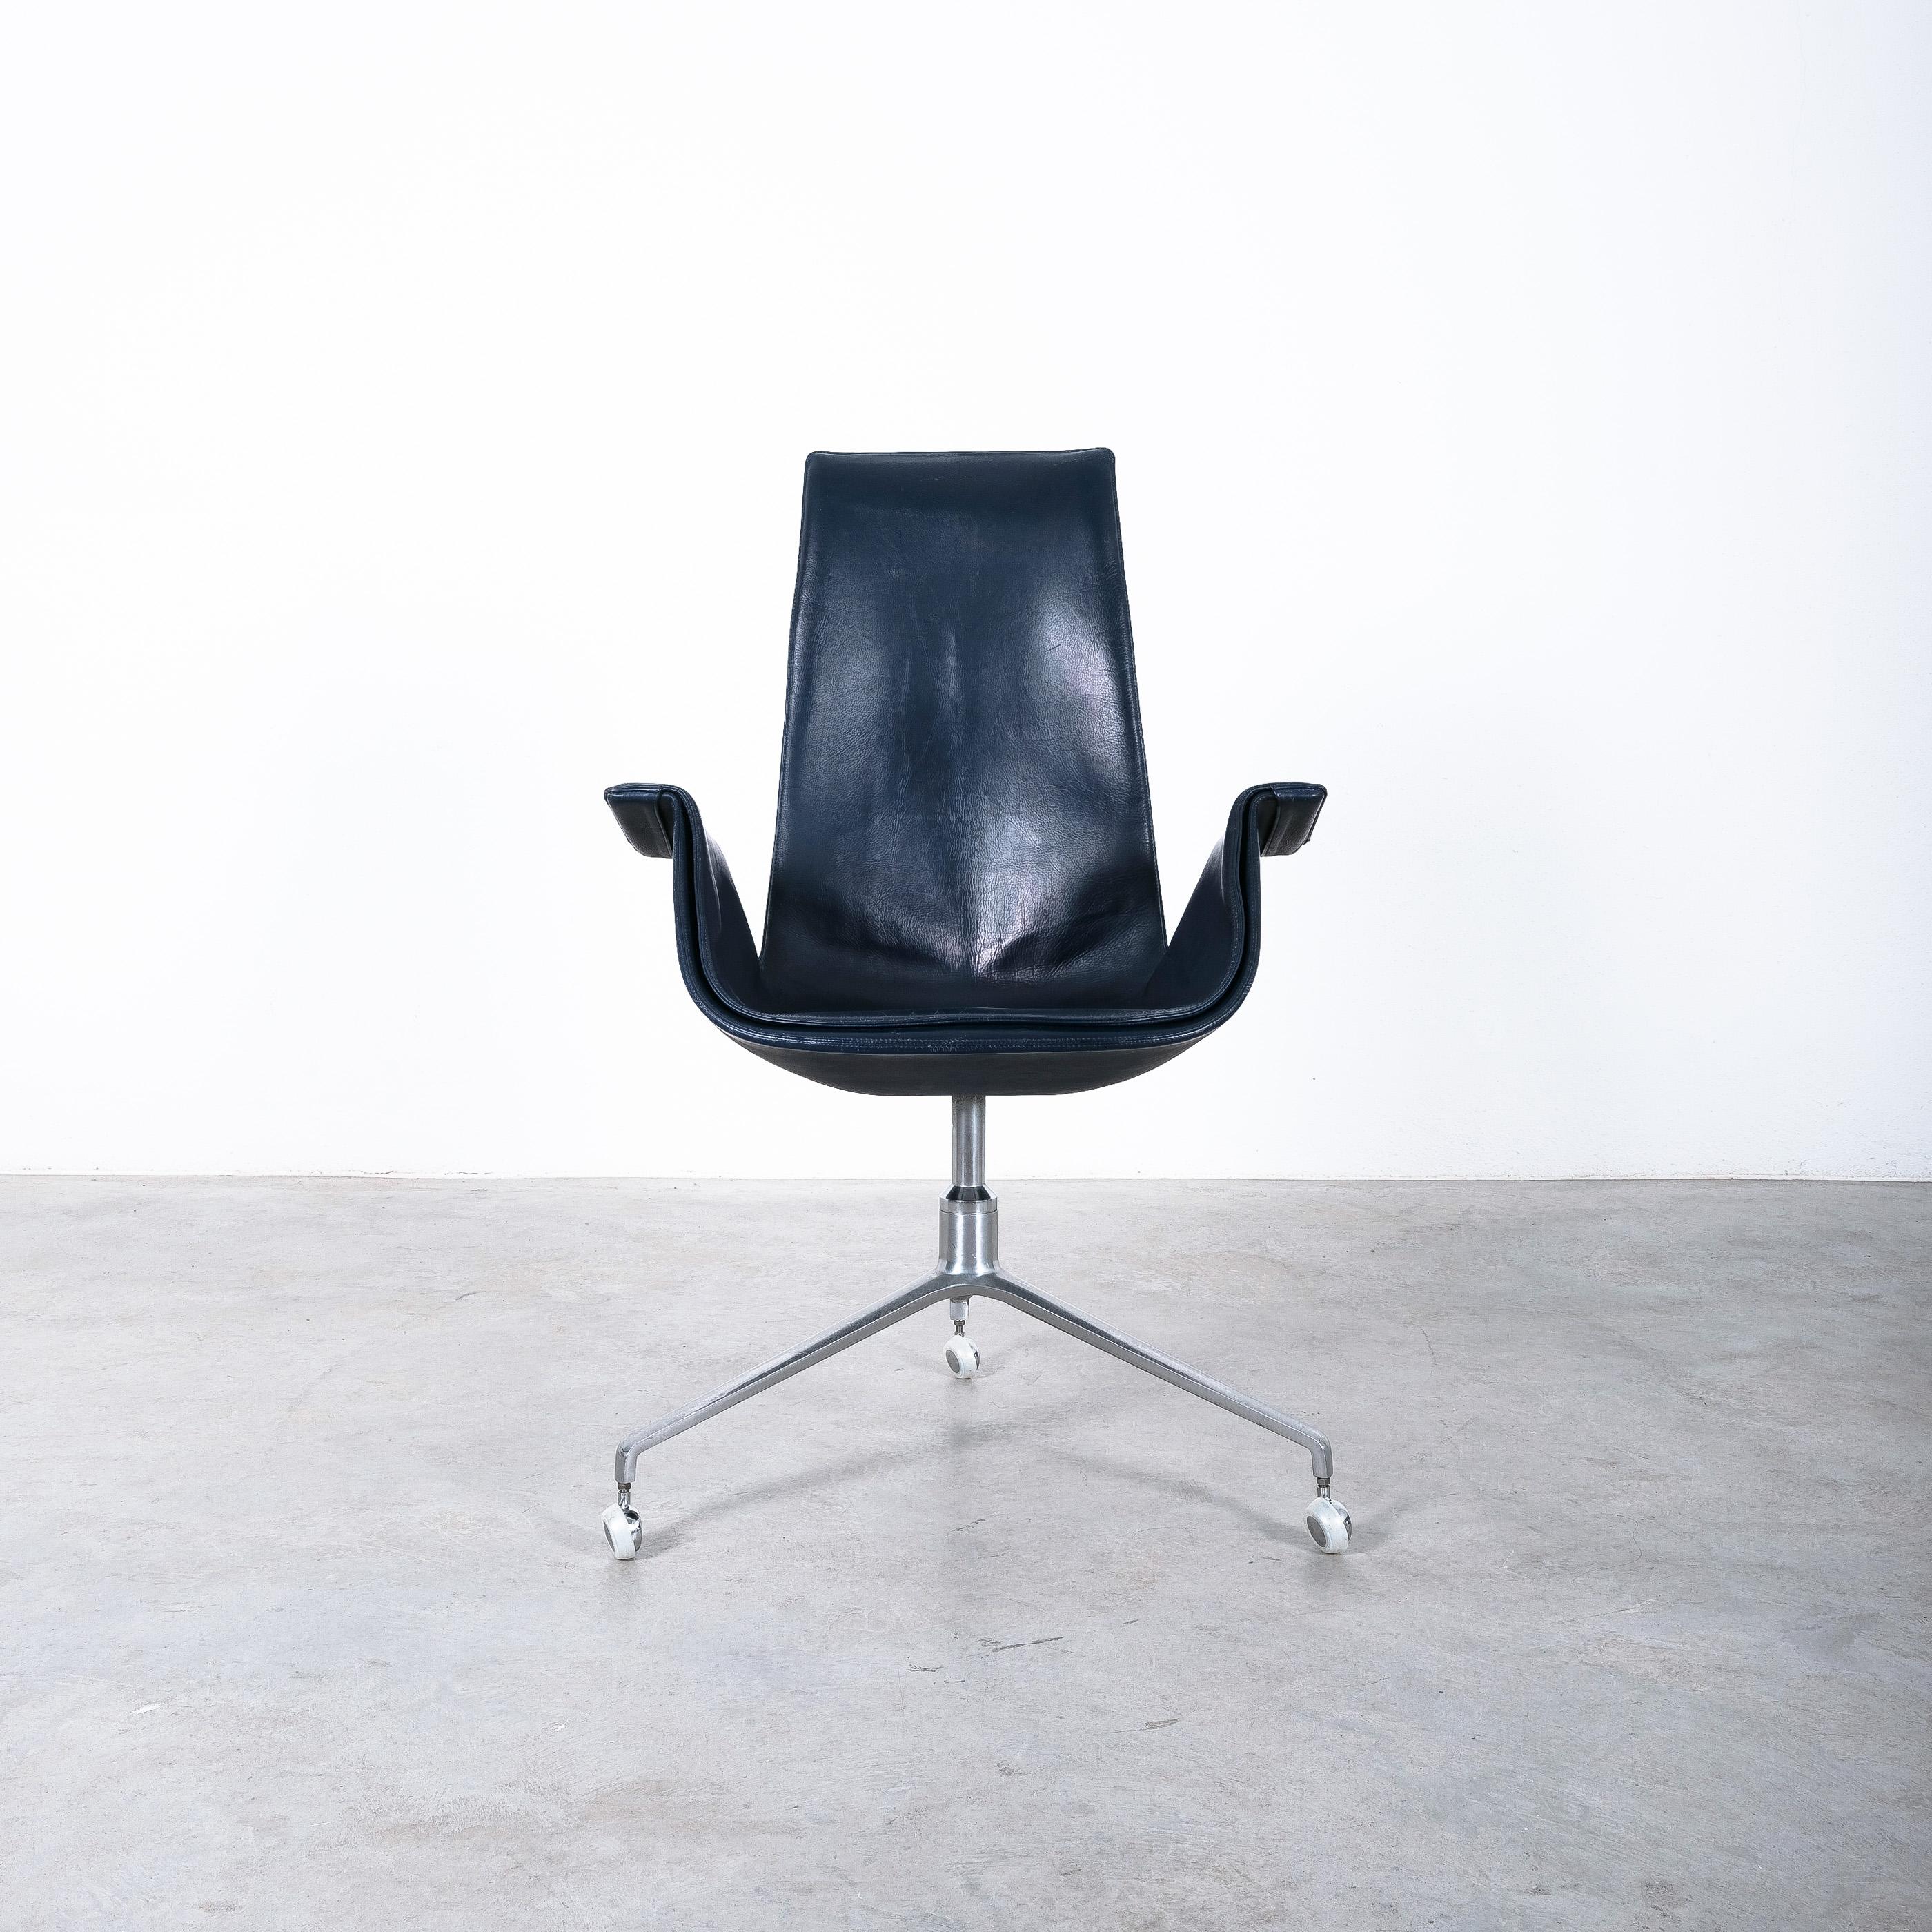 5x Original vintage dark blackish blue leather desk chairs (seat height 19.29